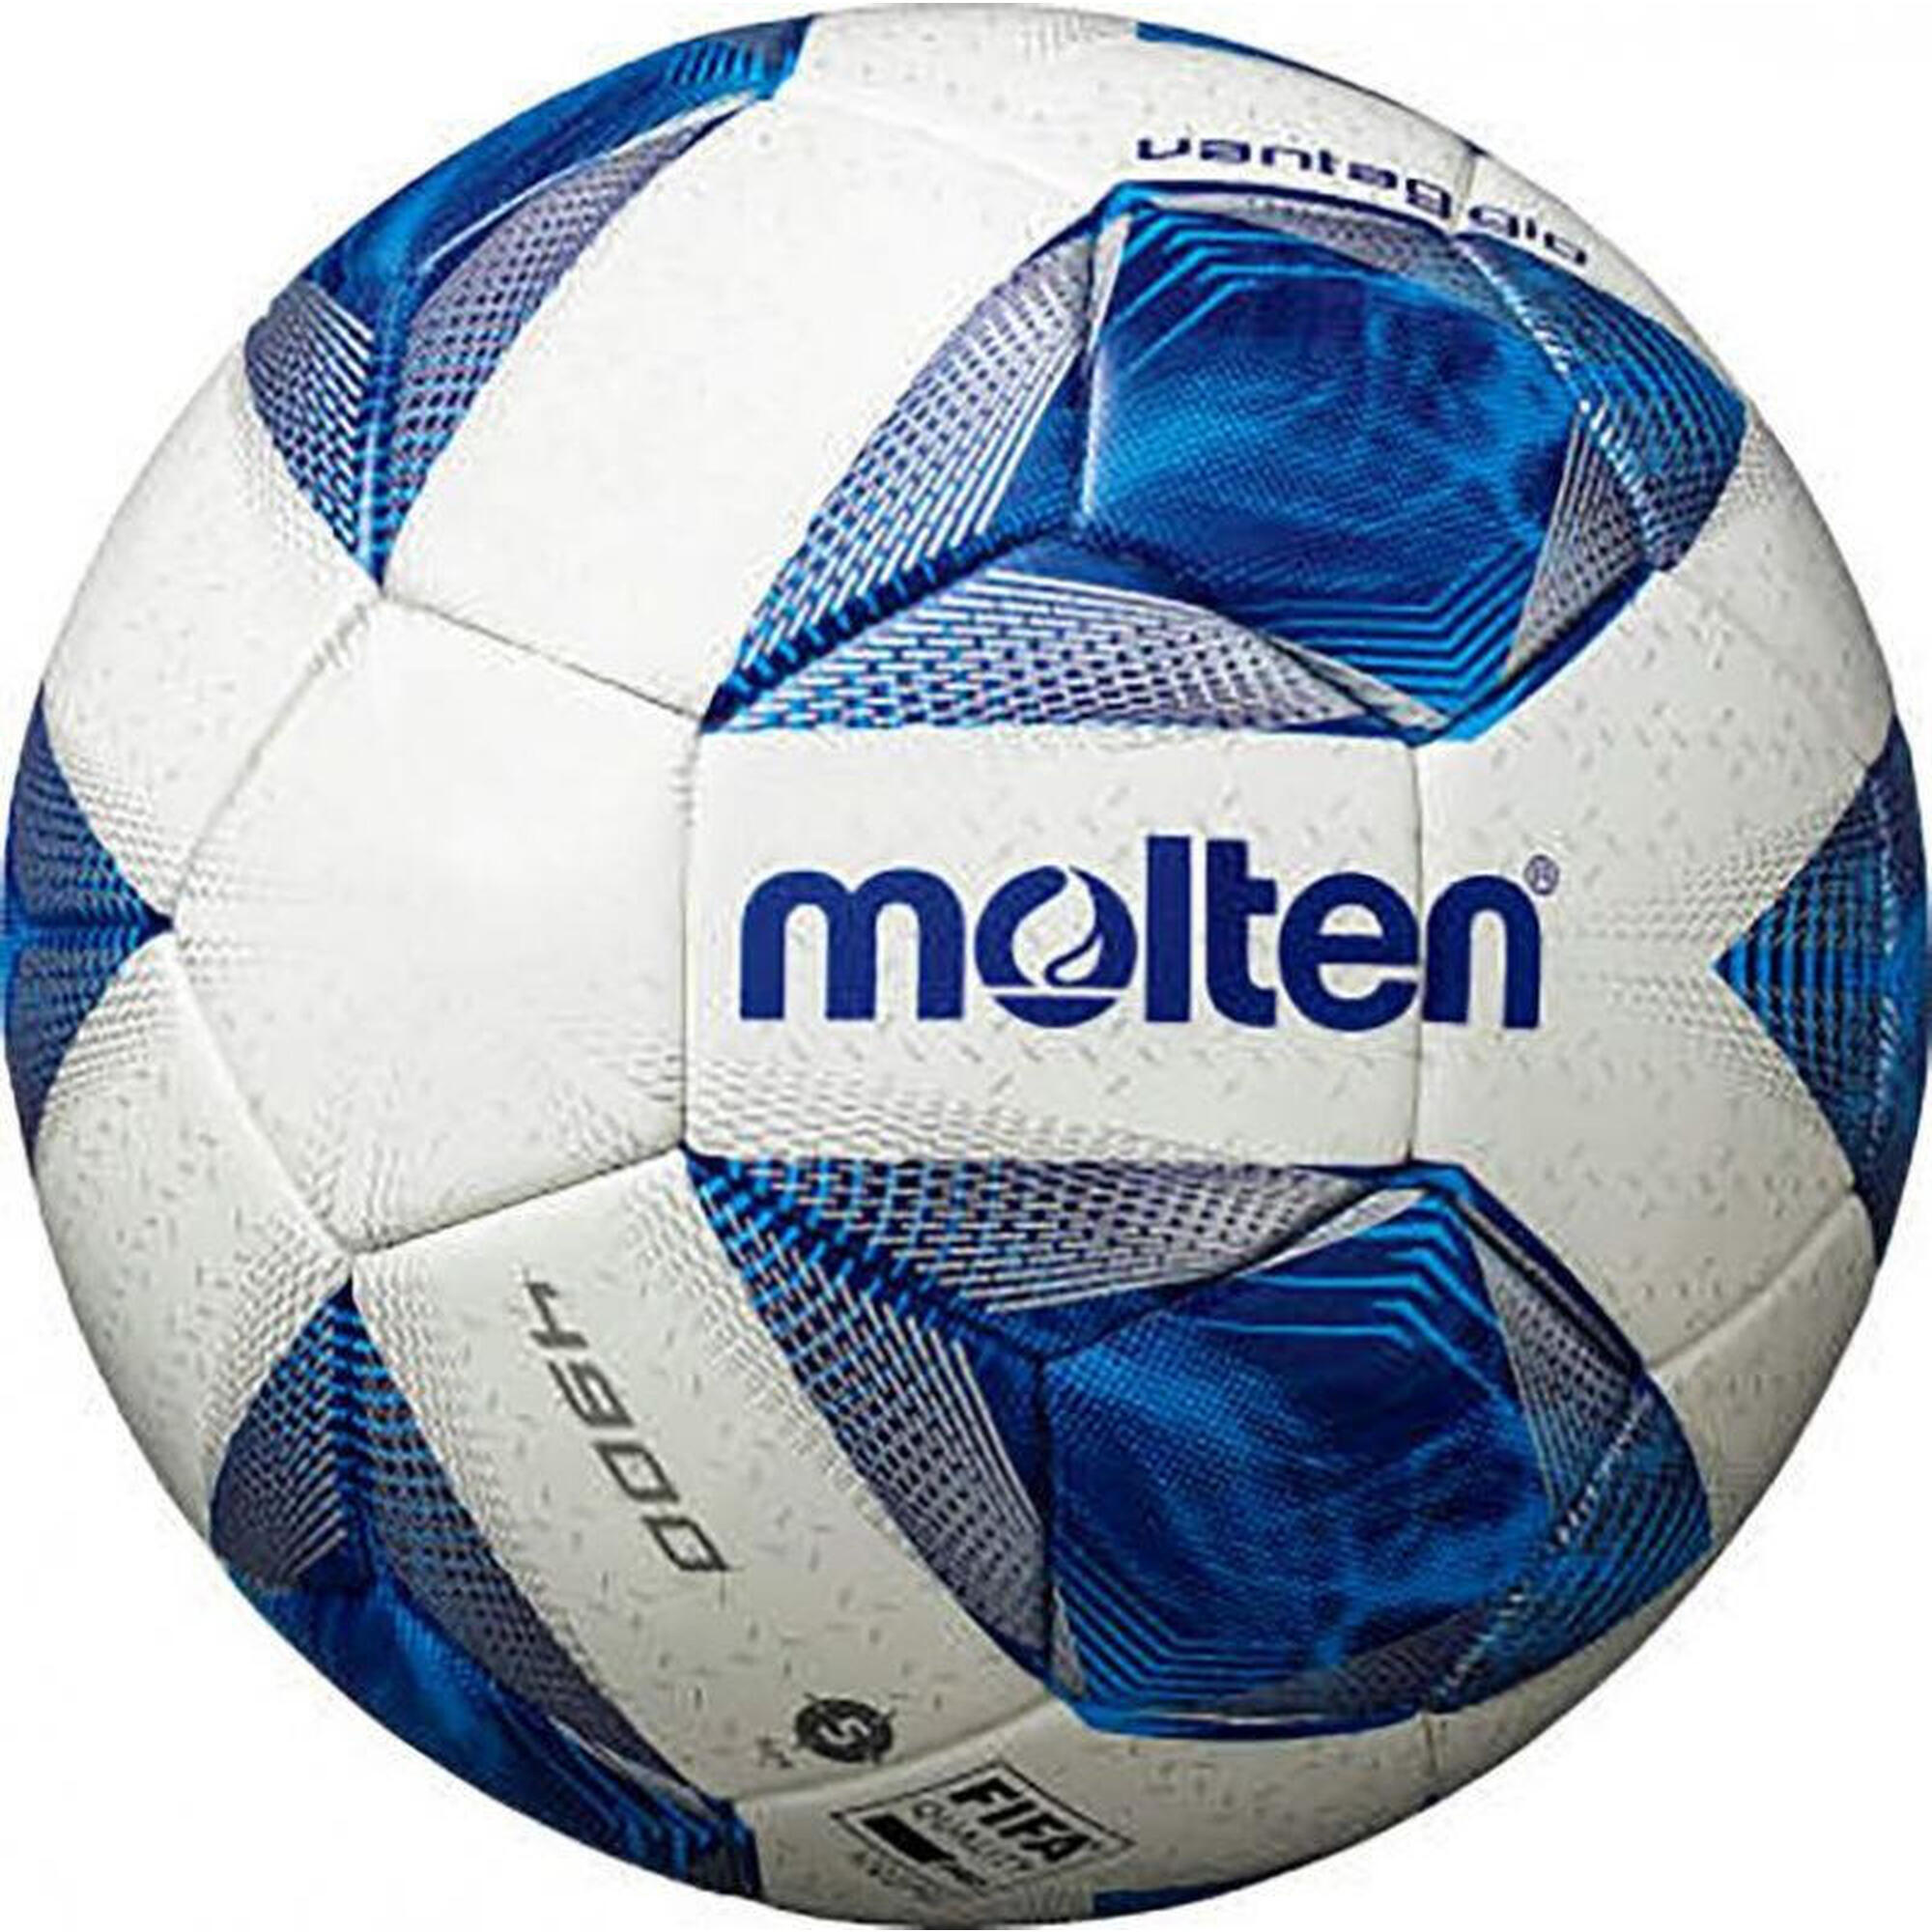 Minge fotbal Molten F5A4900 FIFA QUALITY PRO, ACENTEC TECHNOLOGY